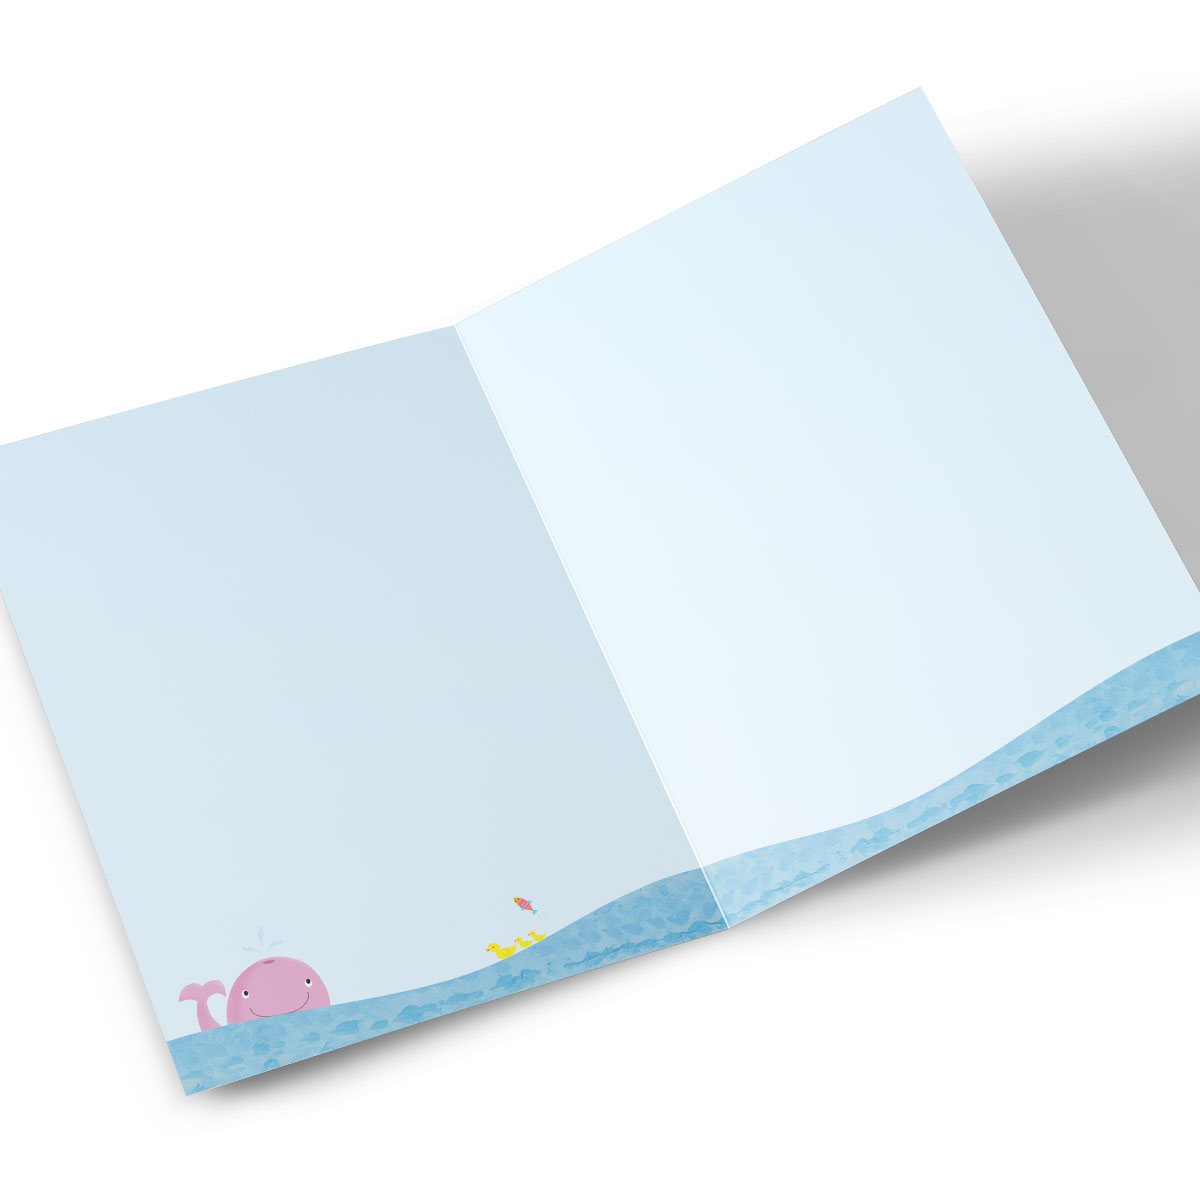 Personalised Baby Card - Animal Ark & Rainbow, Special Godson